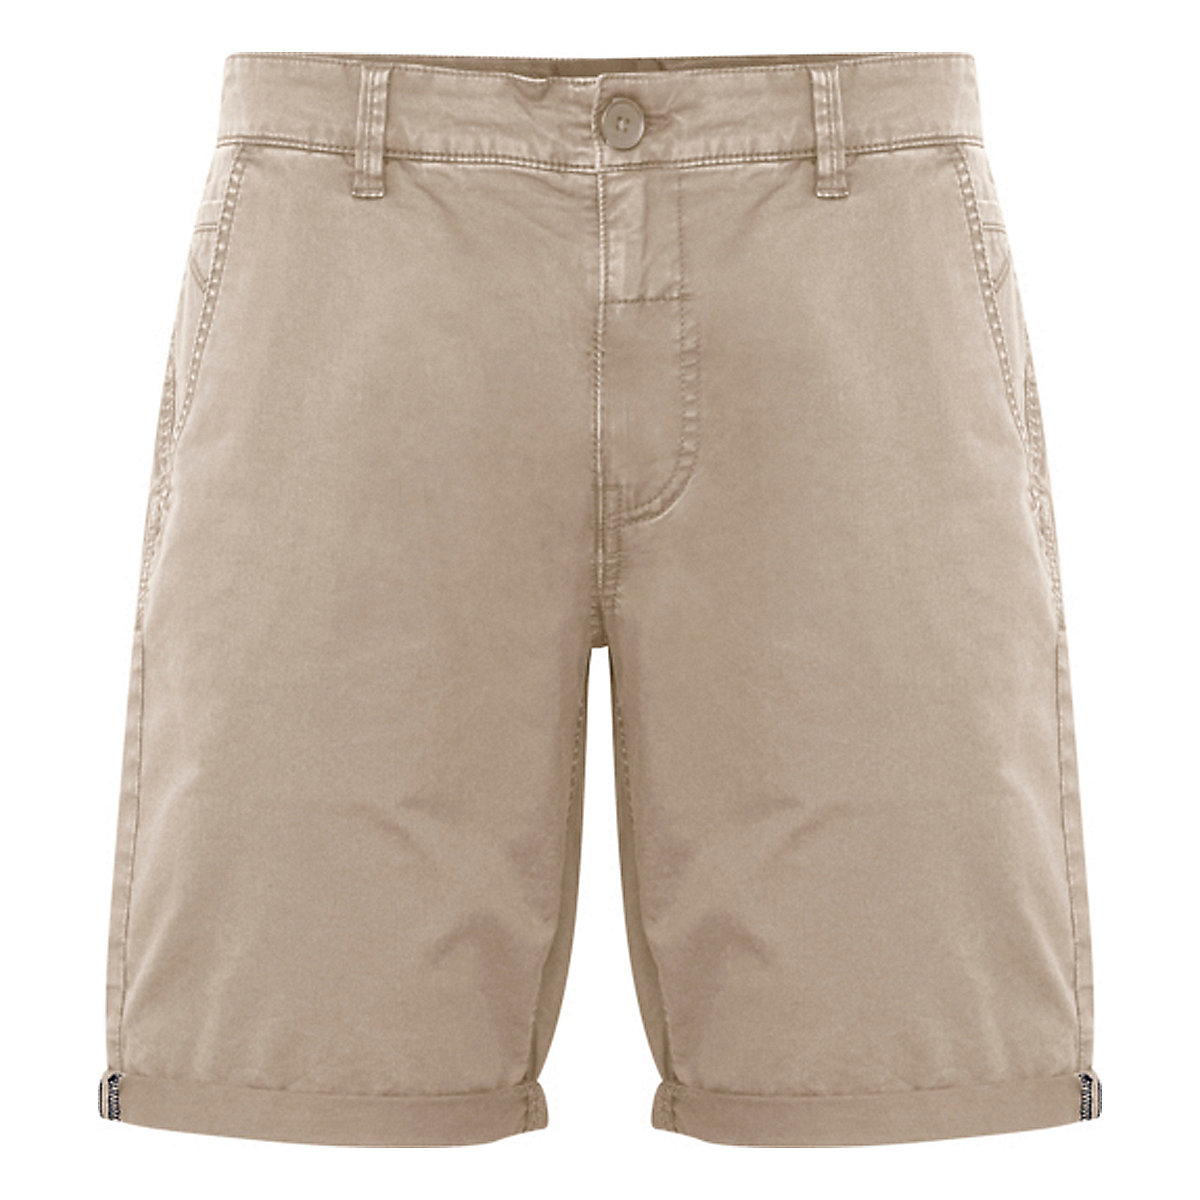 bermuda homme shorts